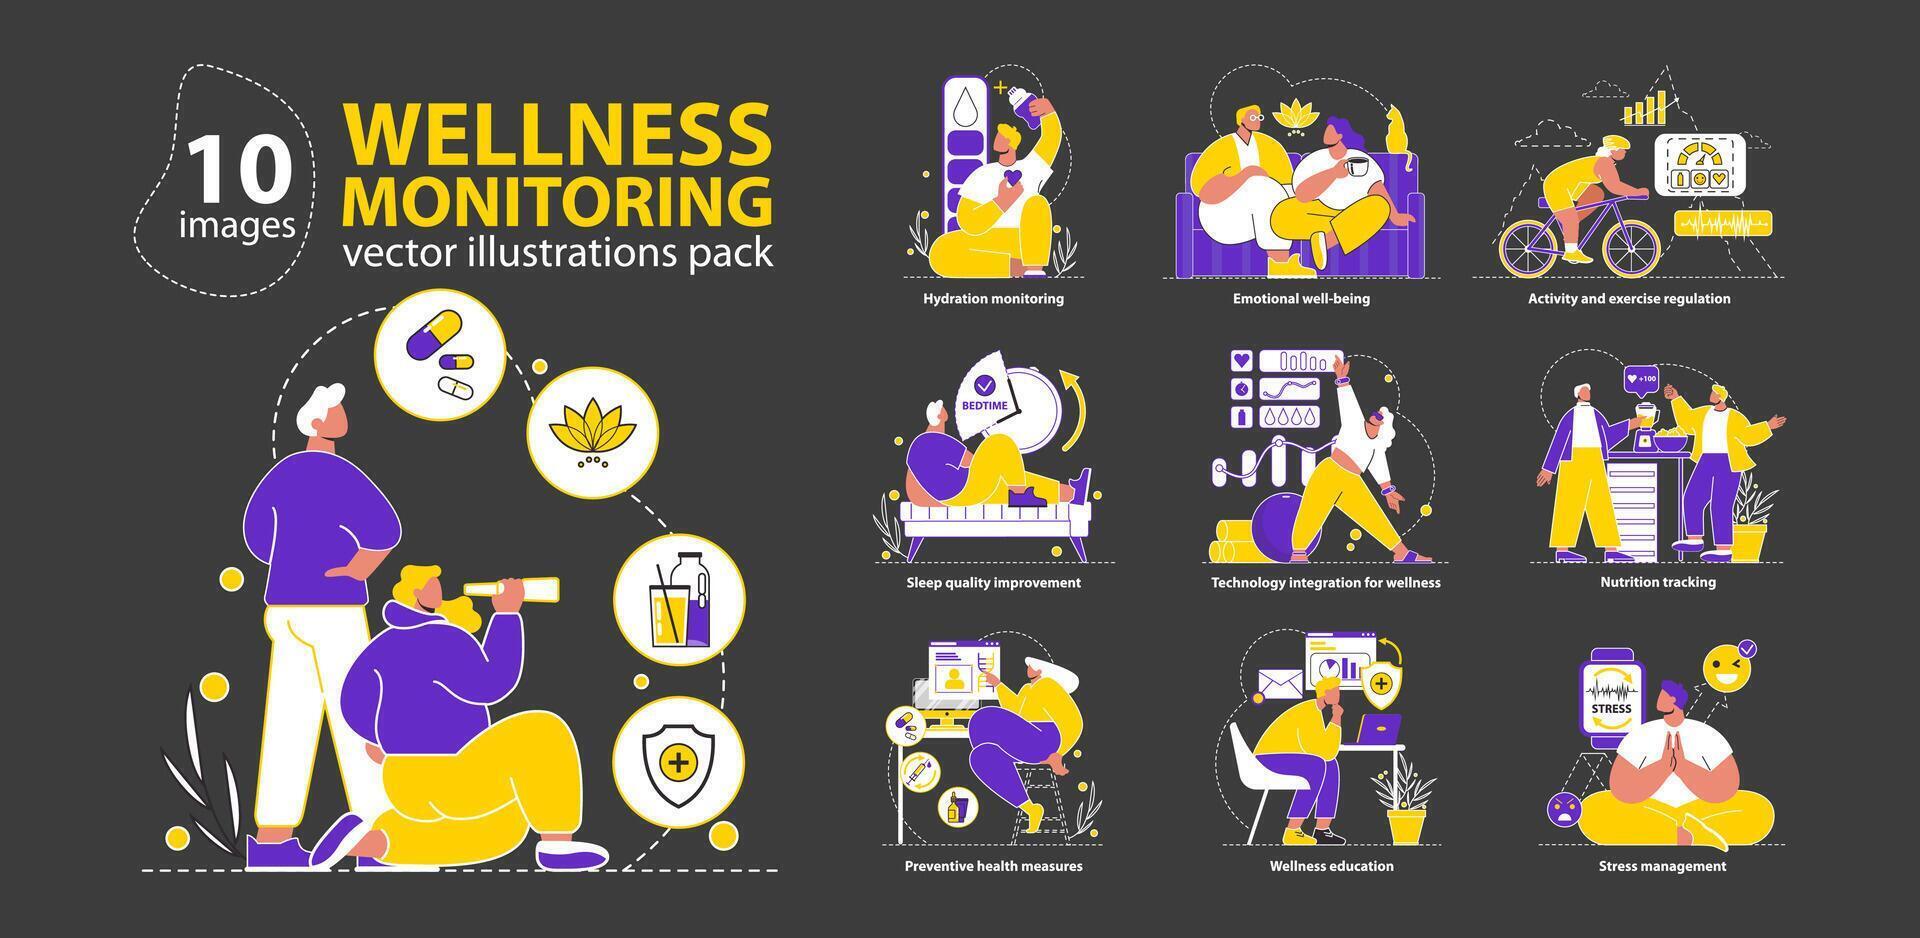 Wellness Monitoring set Harmonious health management through proactive tracking of hydration, sleep, fitness, and nutrition Illustrates lifestyle balance illustration vector